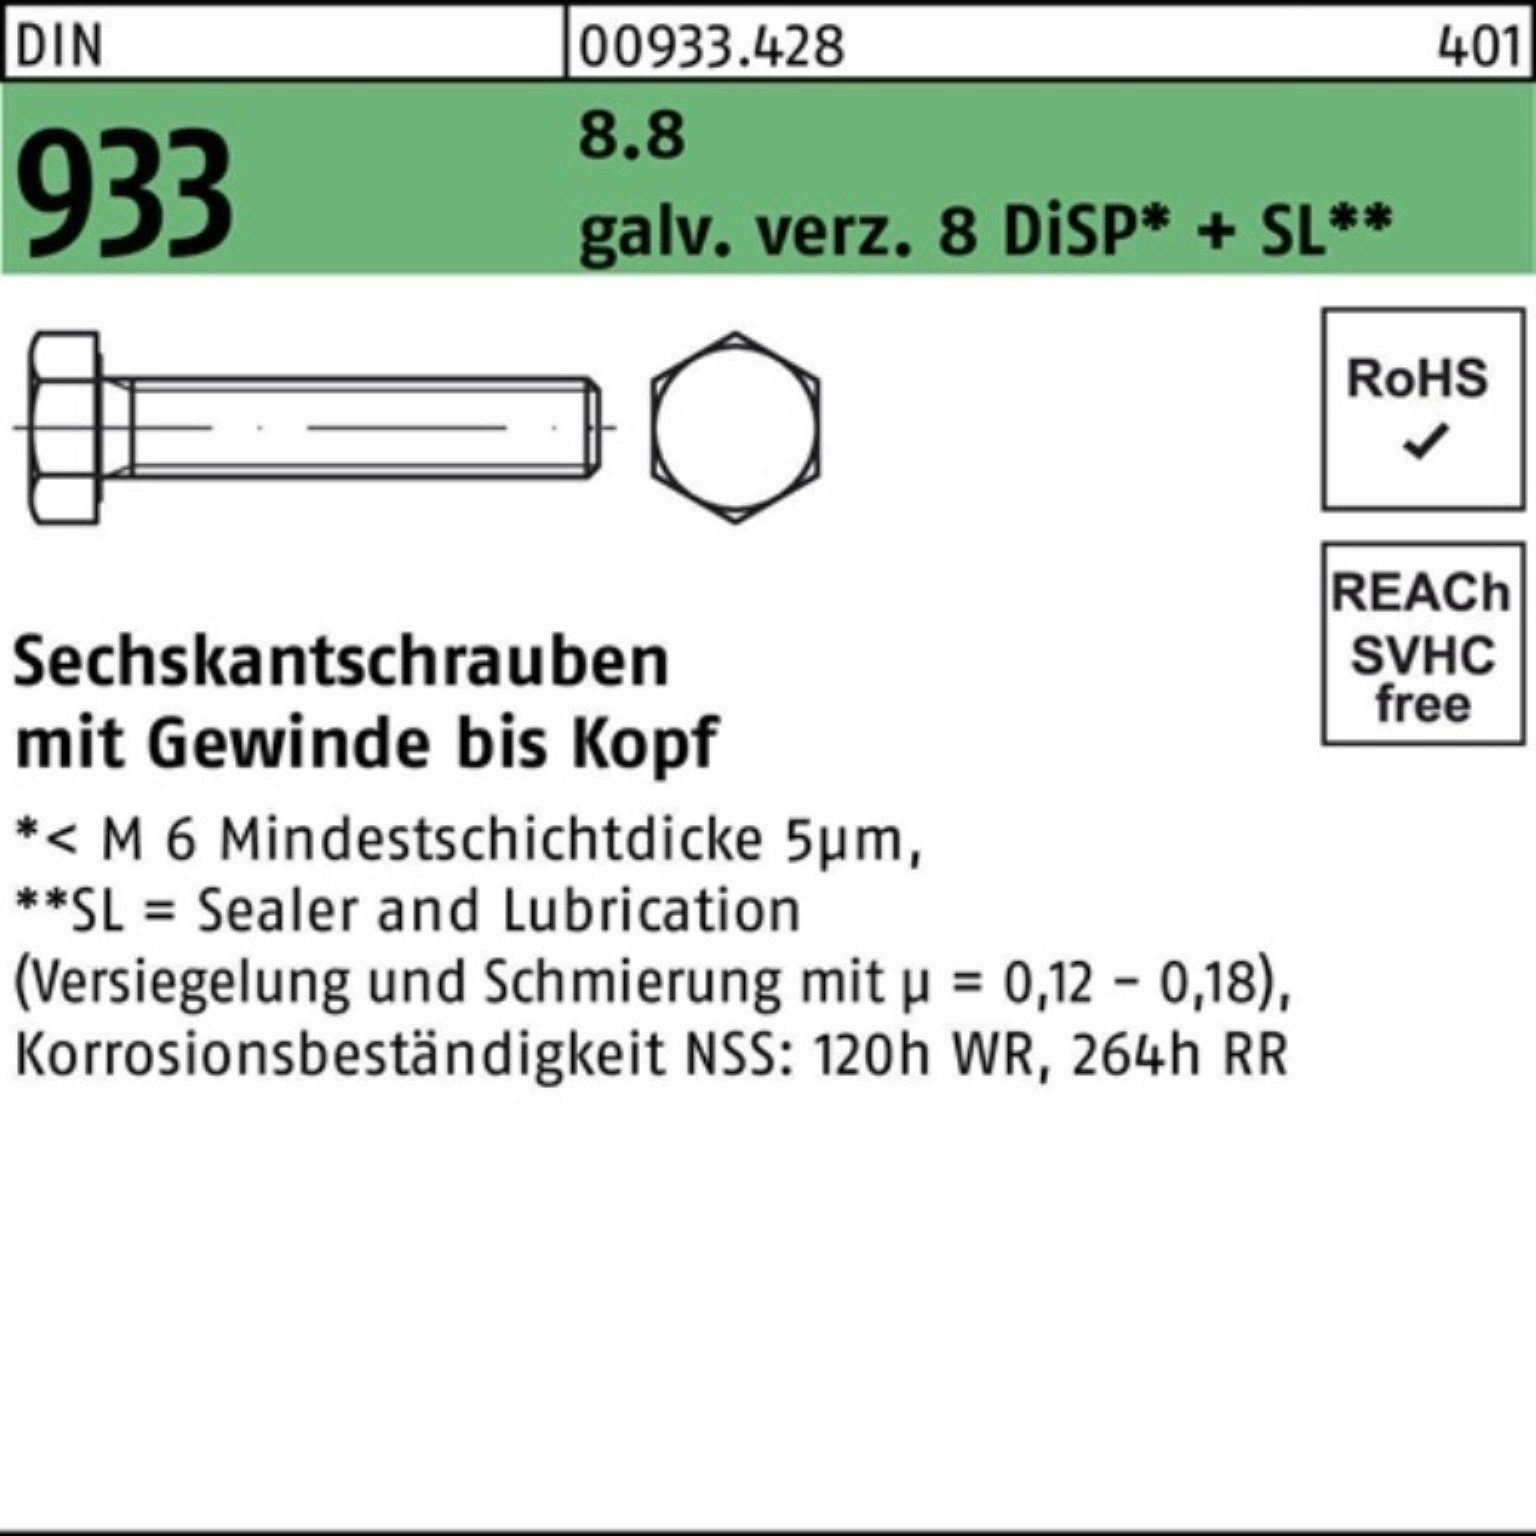 933 Sechskantschraube Zn + Reyher SL VG M6x Sechskantschraube DiSP 30 8 8.8 500er gal DIN Pack